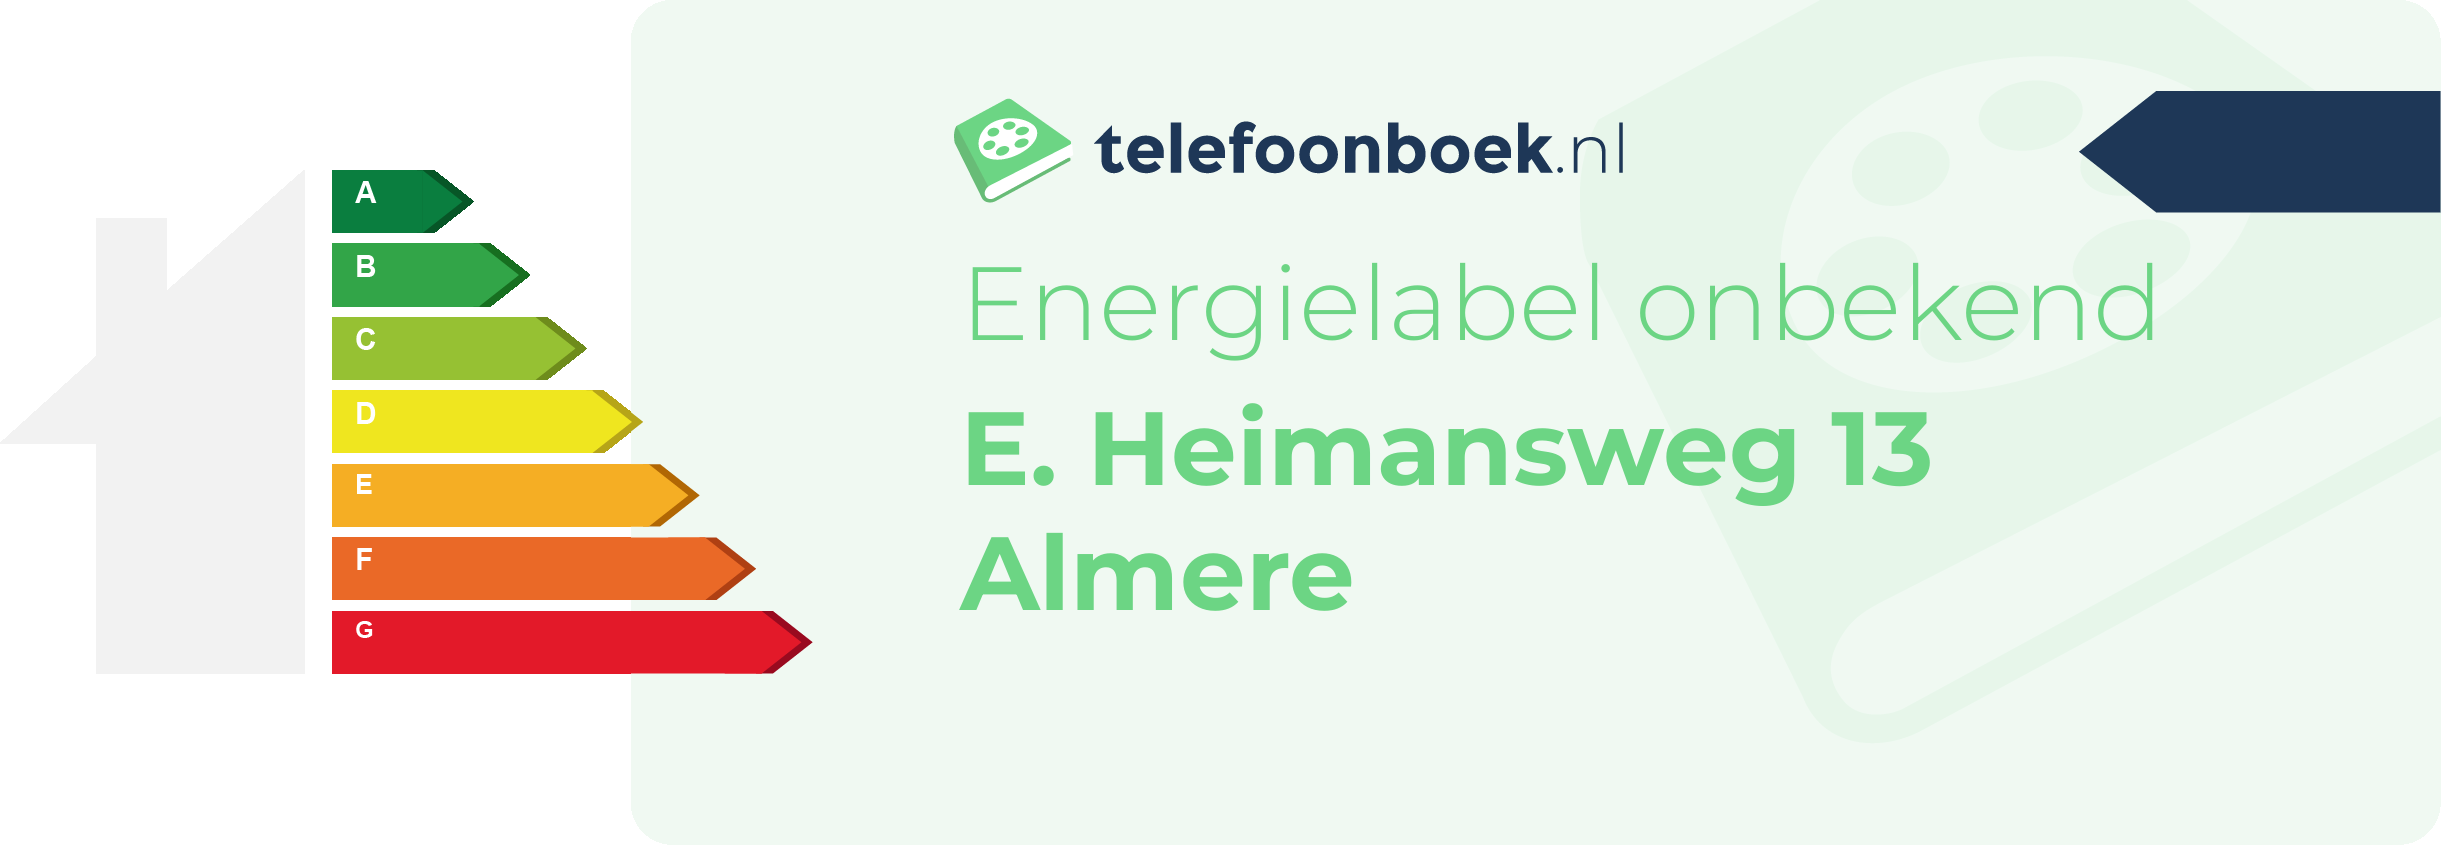 Energielabel E. Heimansweg 13 Almere